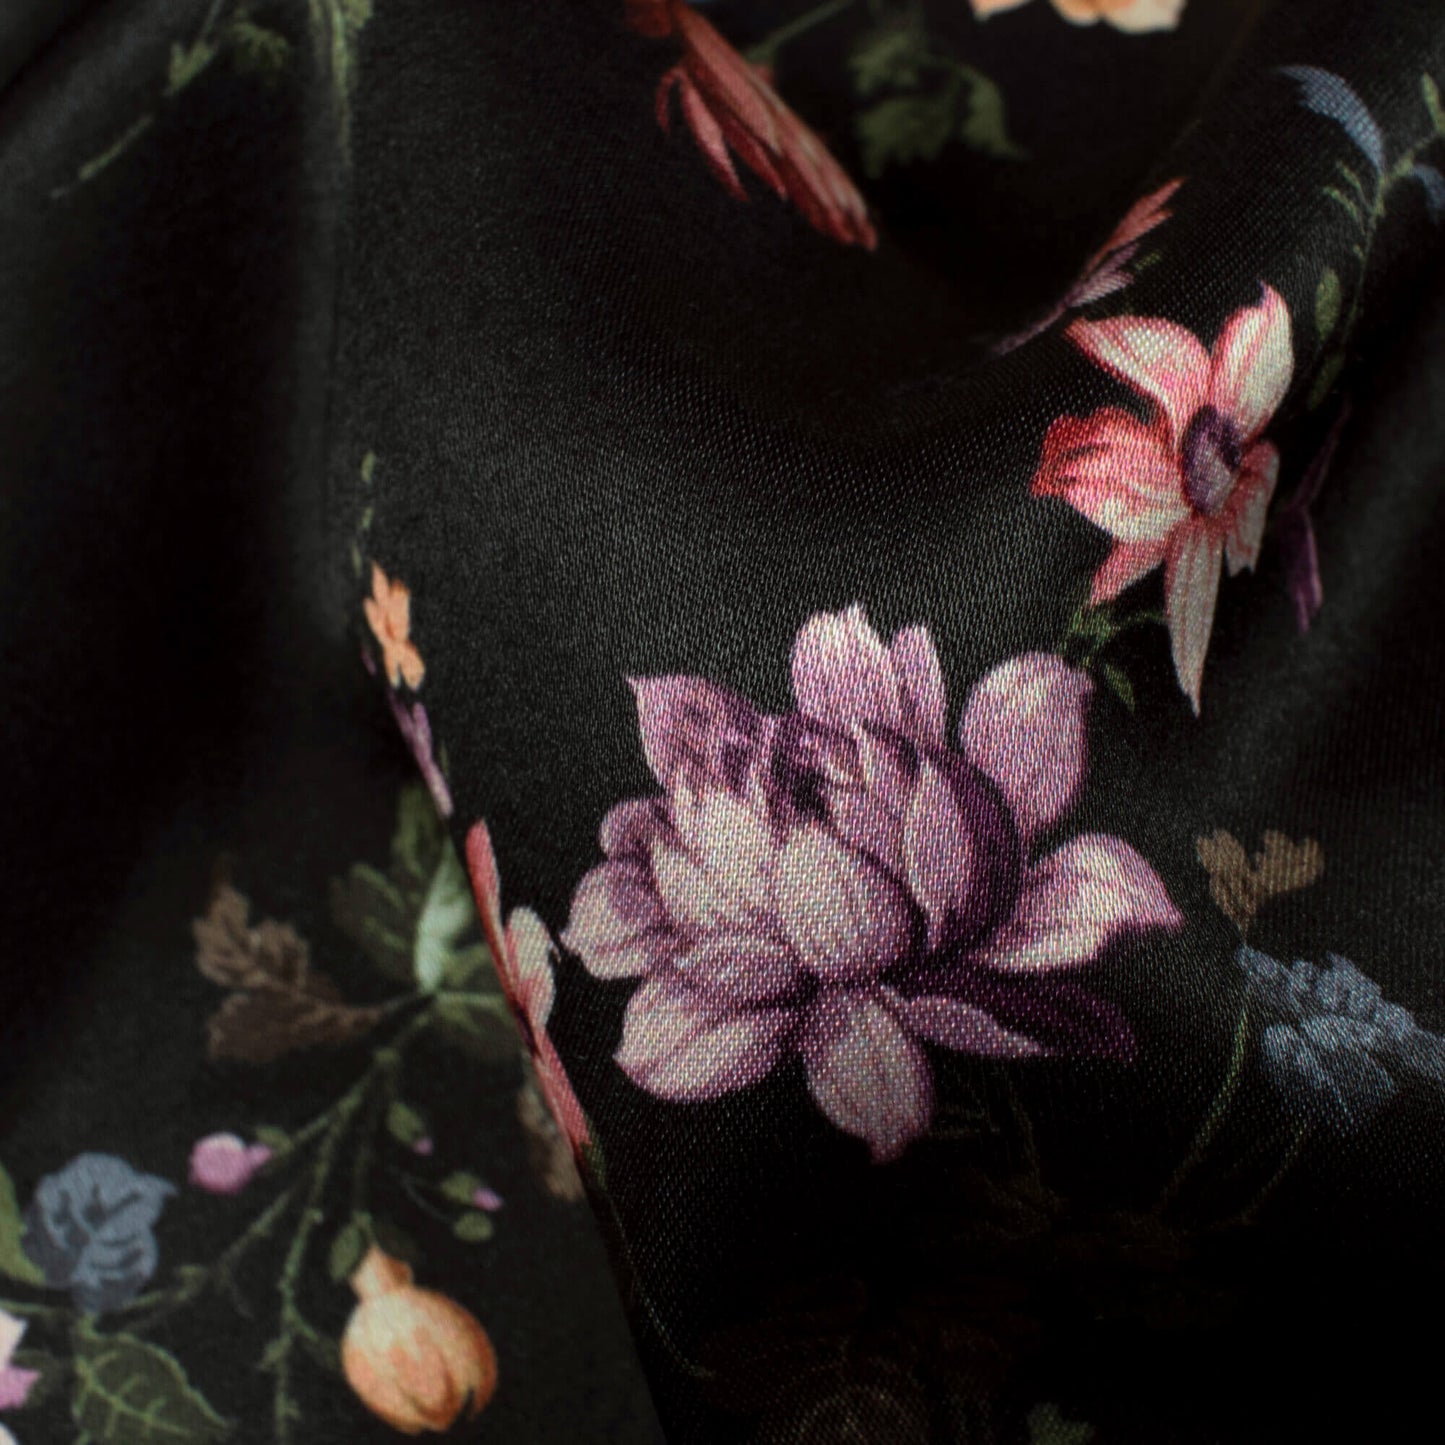 Black And Pink Floral Pattern Digital Print Premium Lush Satin Fabric